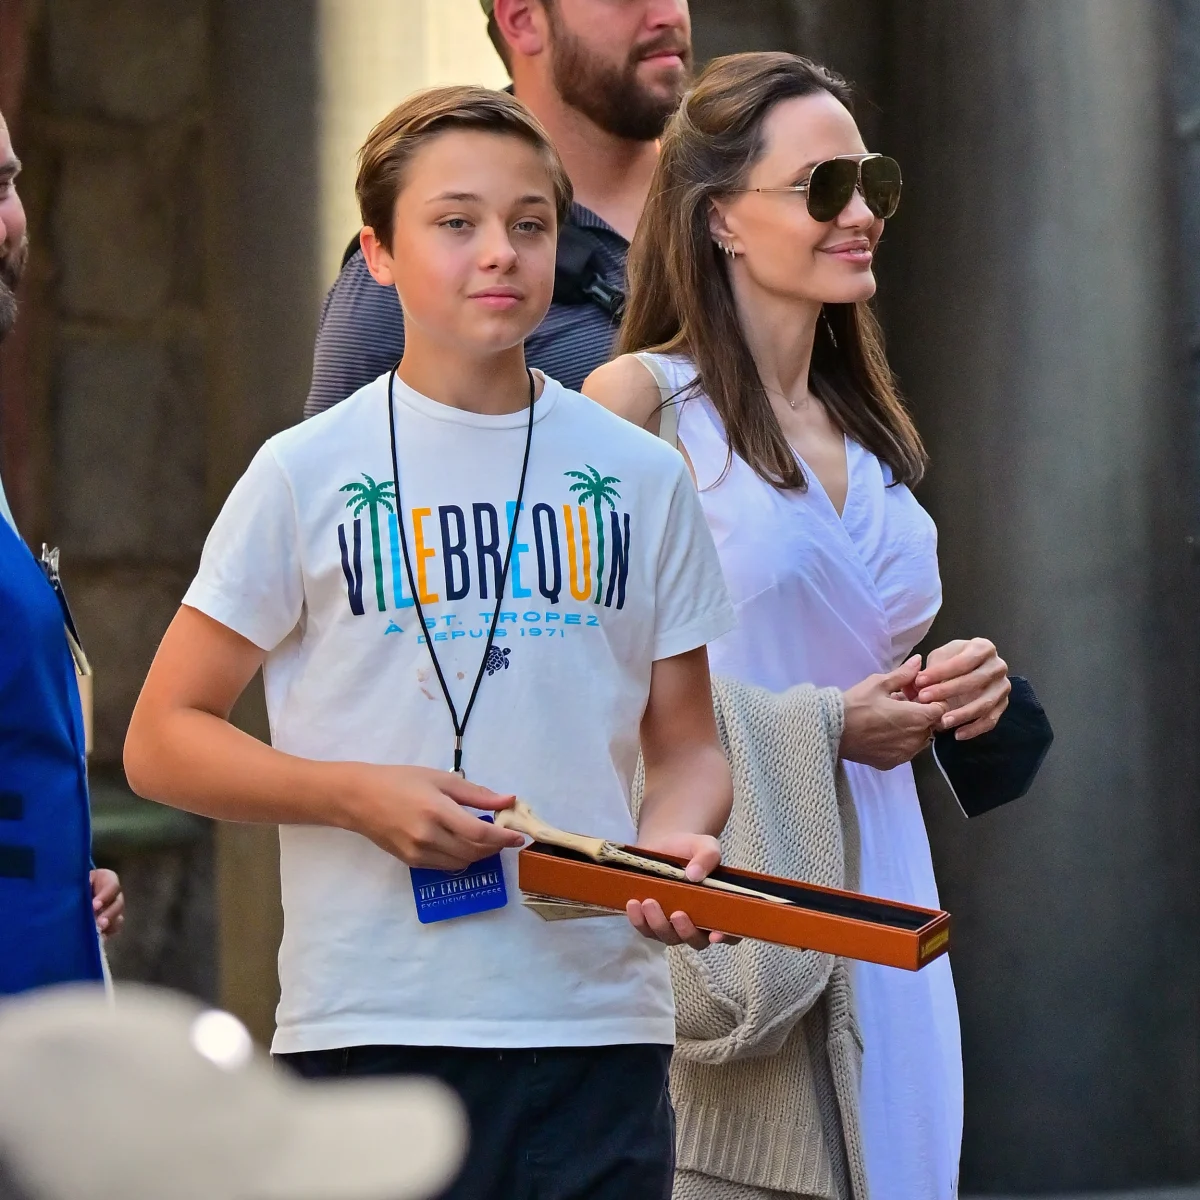 Knox Jolie Pitt Son Of Angelina Jolie And Brad Pitt3.webp